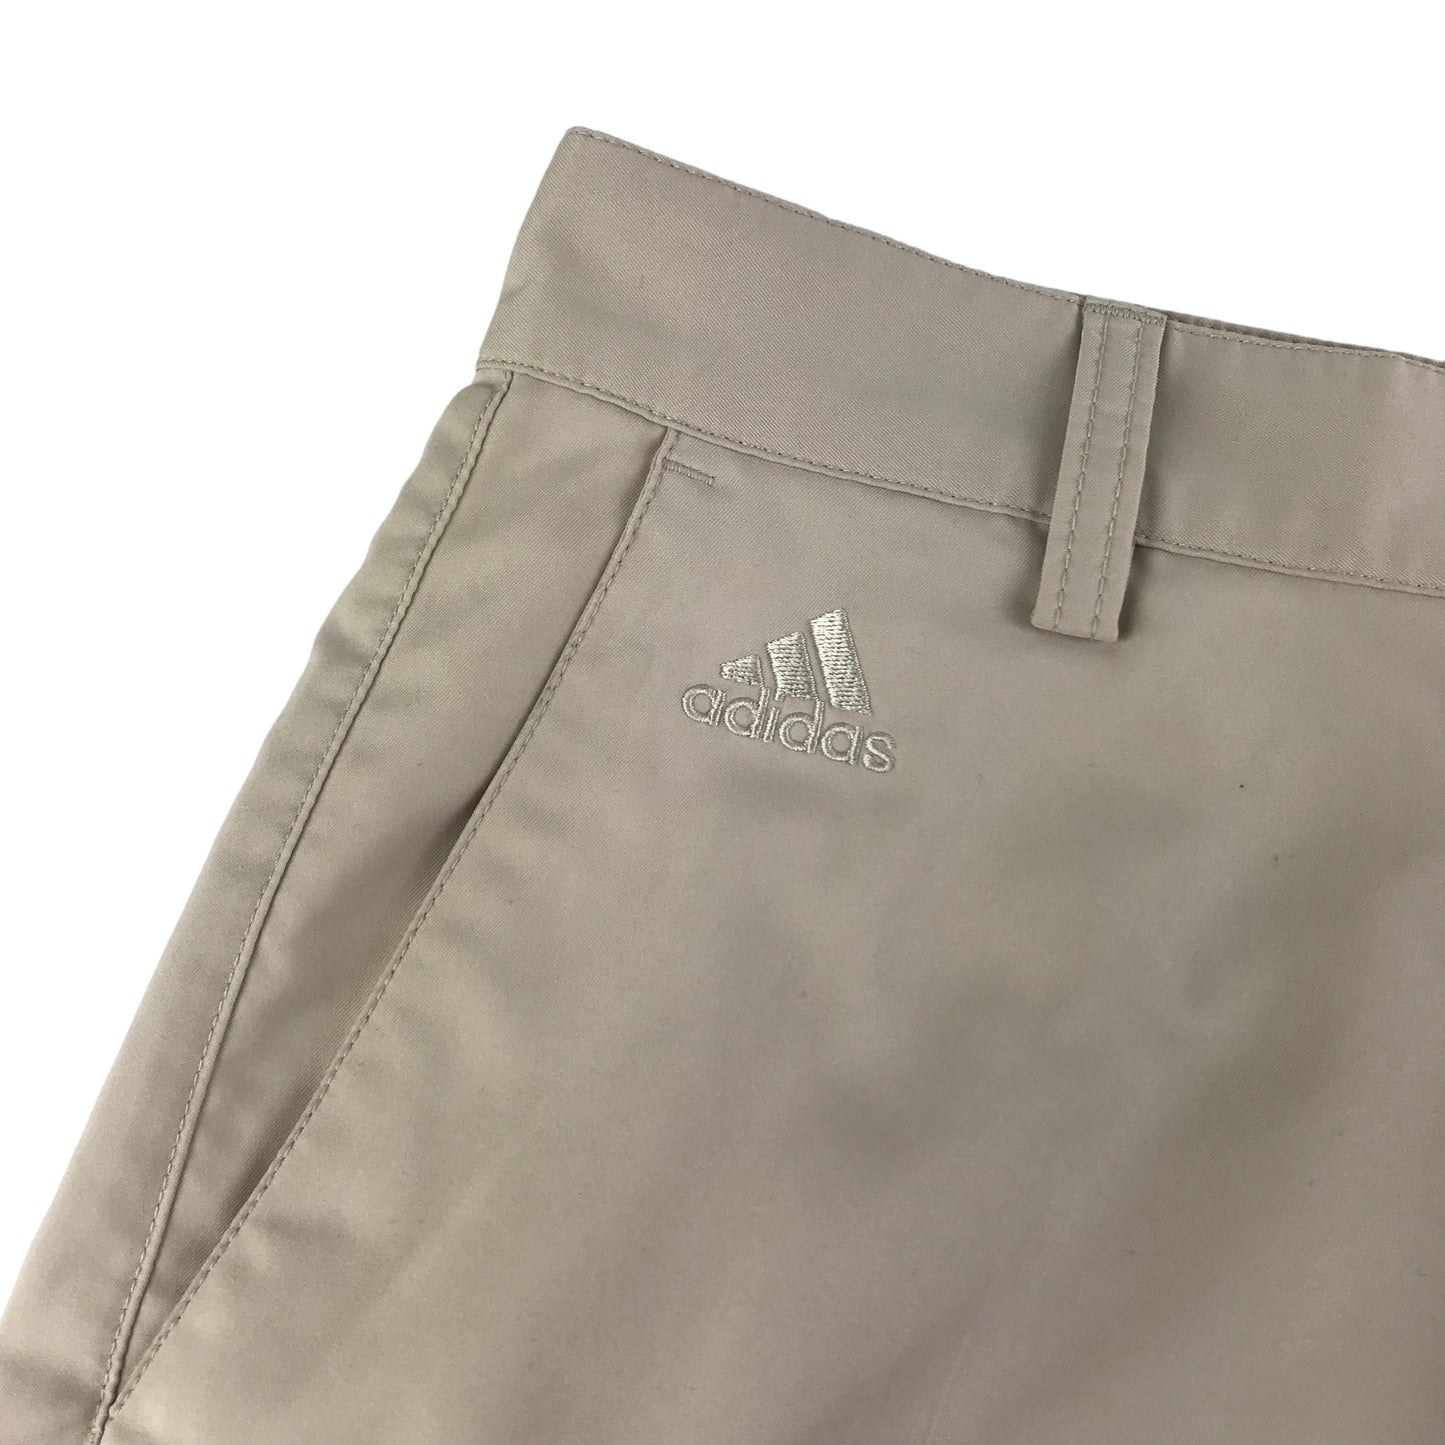 Adidas Golf Shorts Size 32in Waist Light Beige ClimaLite